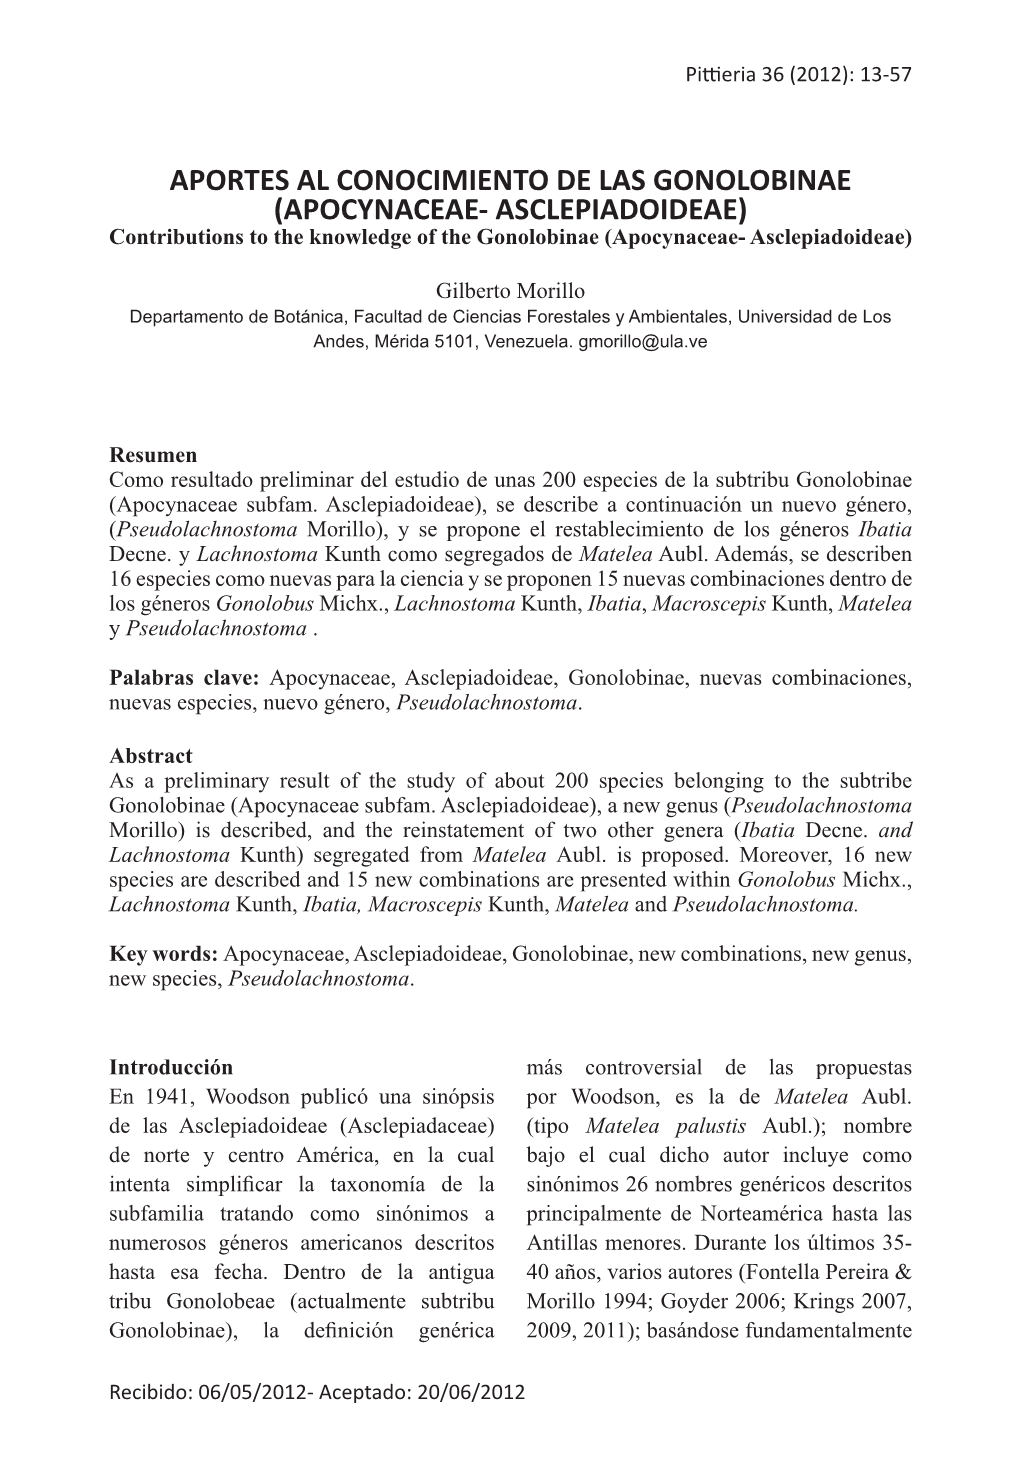 APORTES AL CONOCIMIENTO DE LAS GONOLOBINAE (APOCYNACEAE- ASCLEPIADOIDEAE) Contributions to the Knowledge of the Gonolobinae (Apocynaceae- Asclepiadoideae)